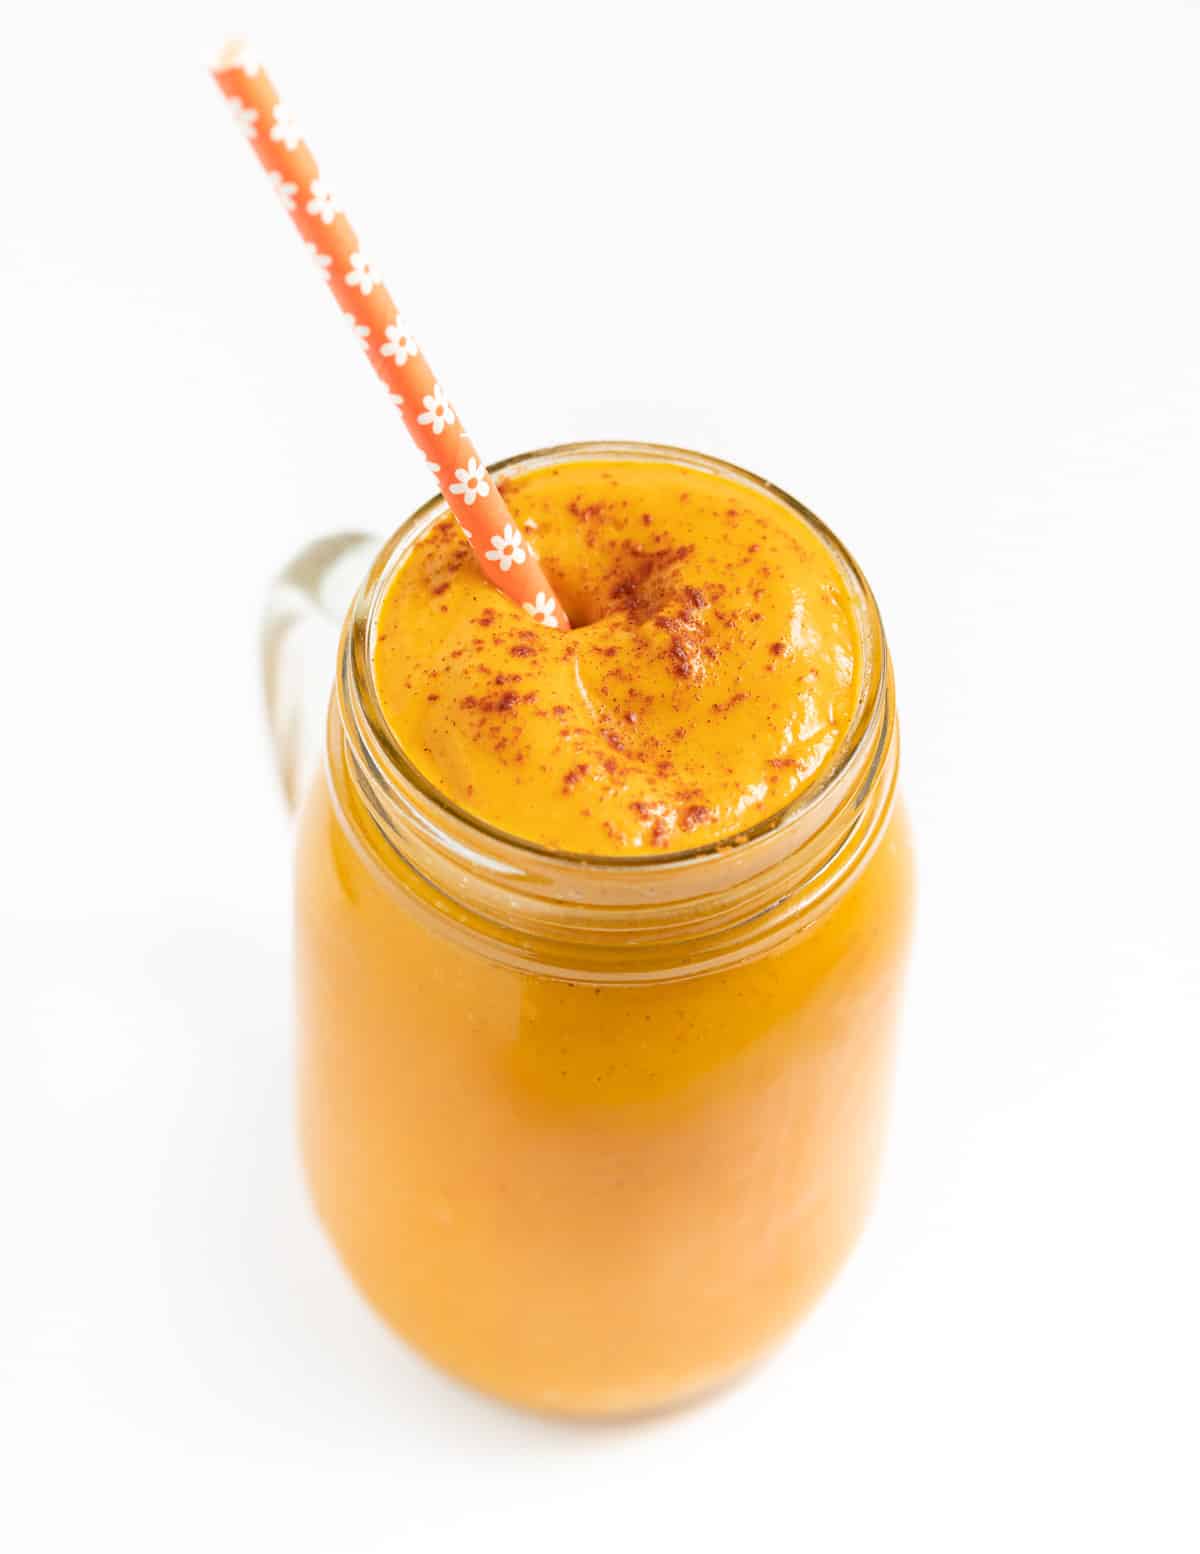 a glass of vegan pumpkin smoothie with an orange flowery straw